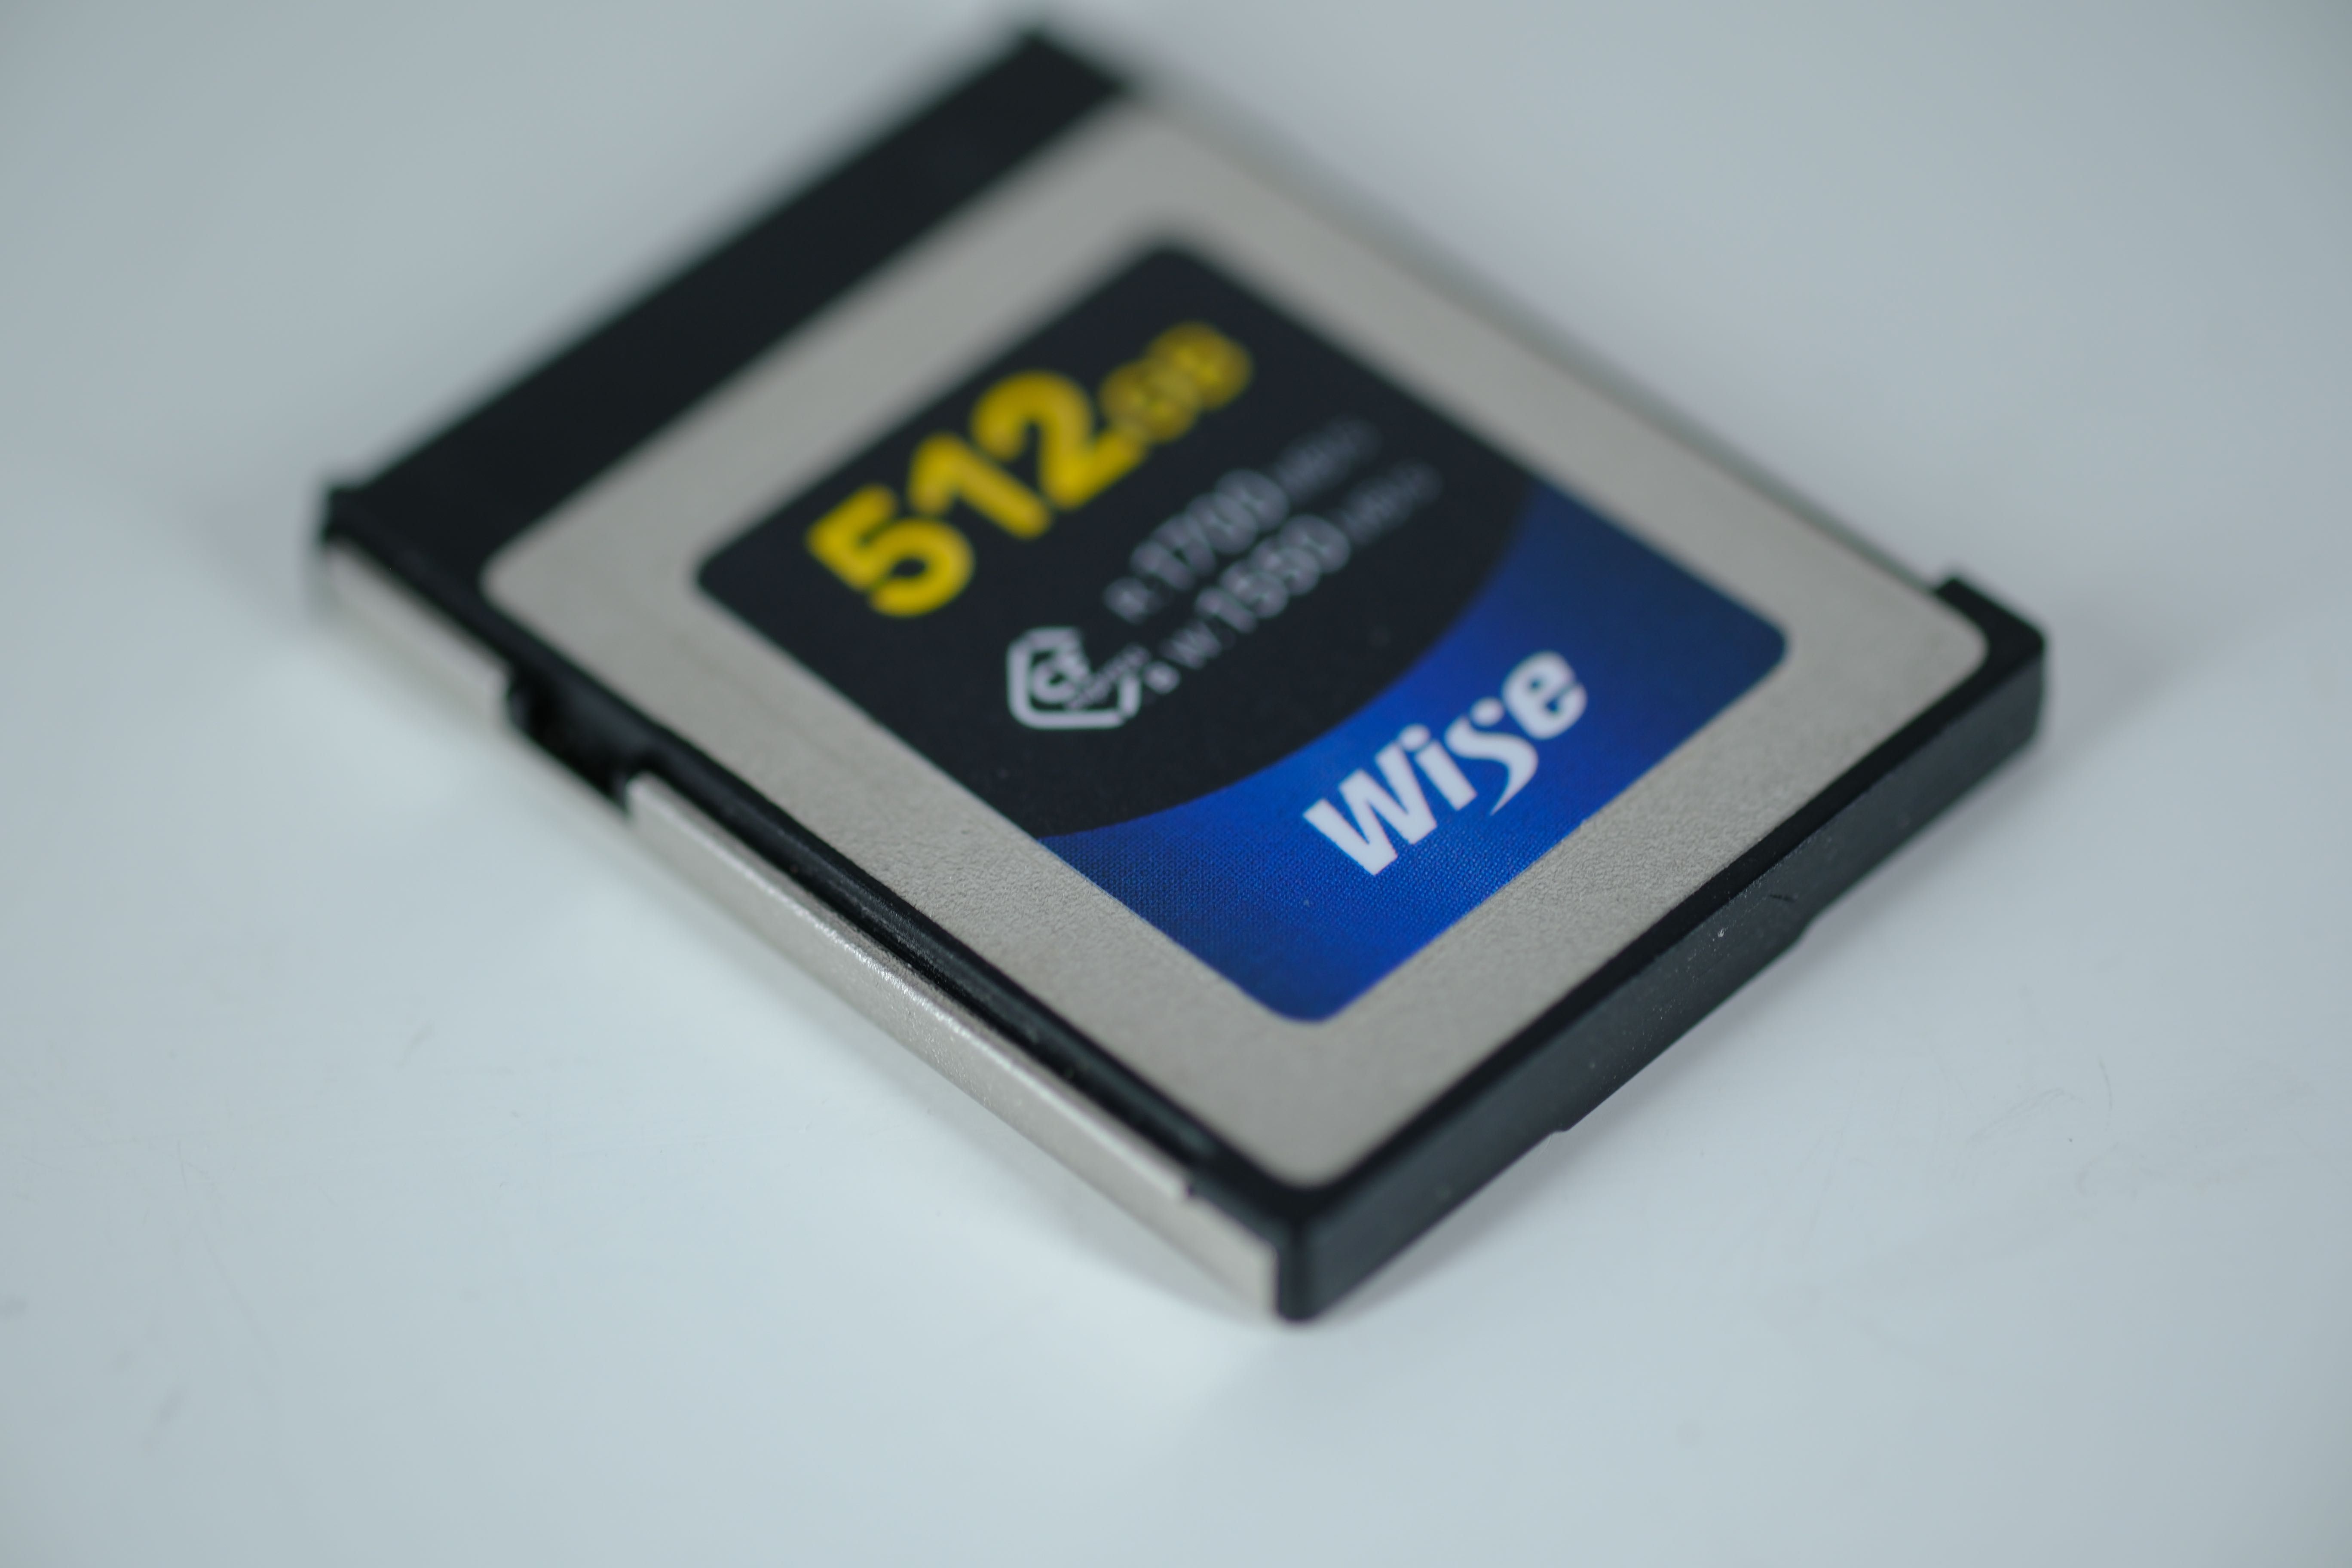 Wise Advanced CFX-B CFexpress 512 GB + гарантія \ без передоплат